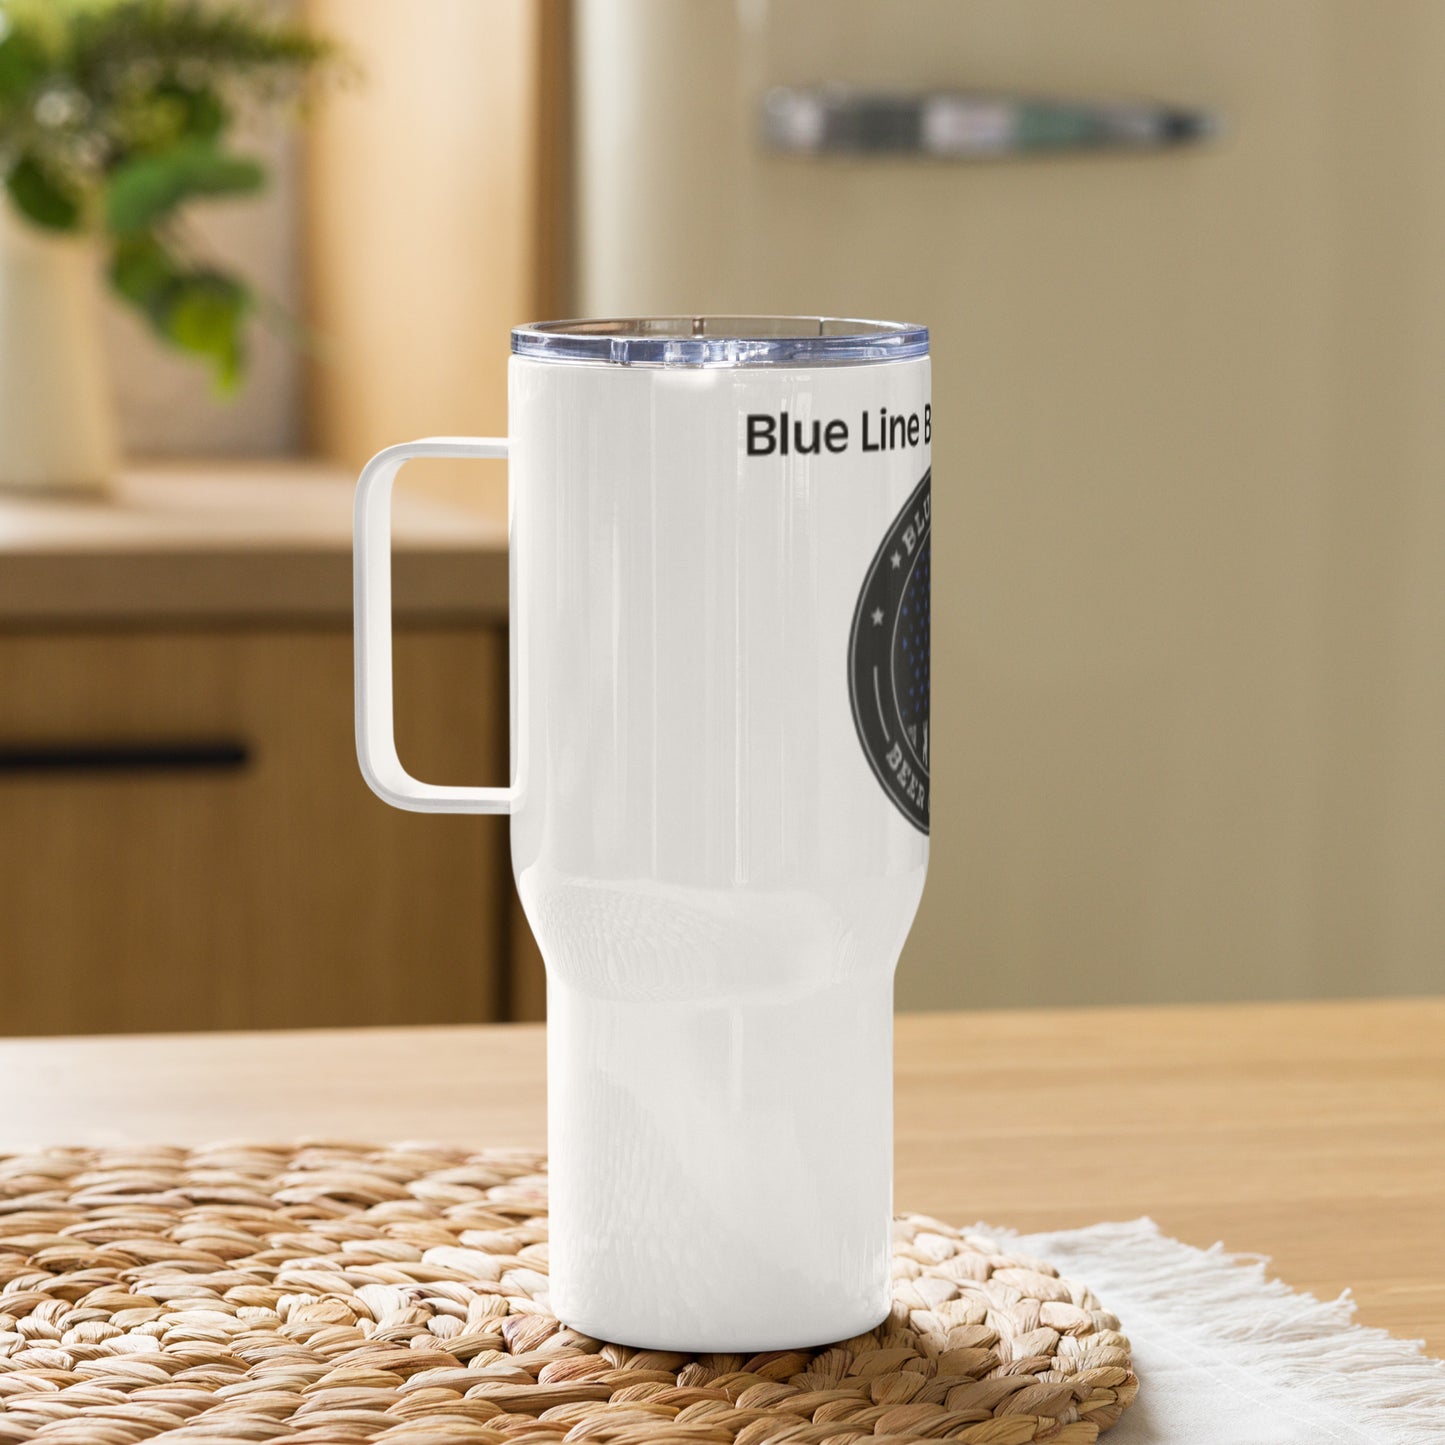 Blue Line Beer Travel mug with a handle